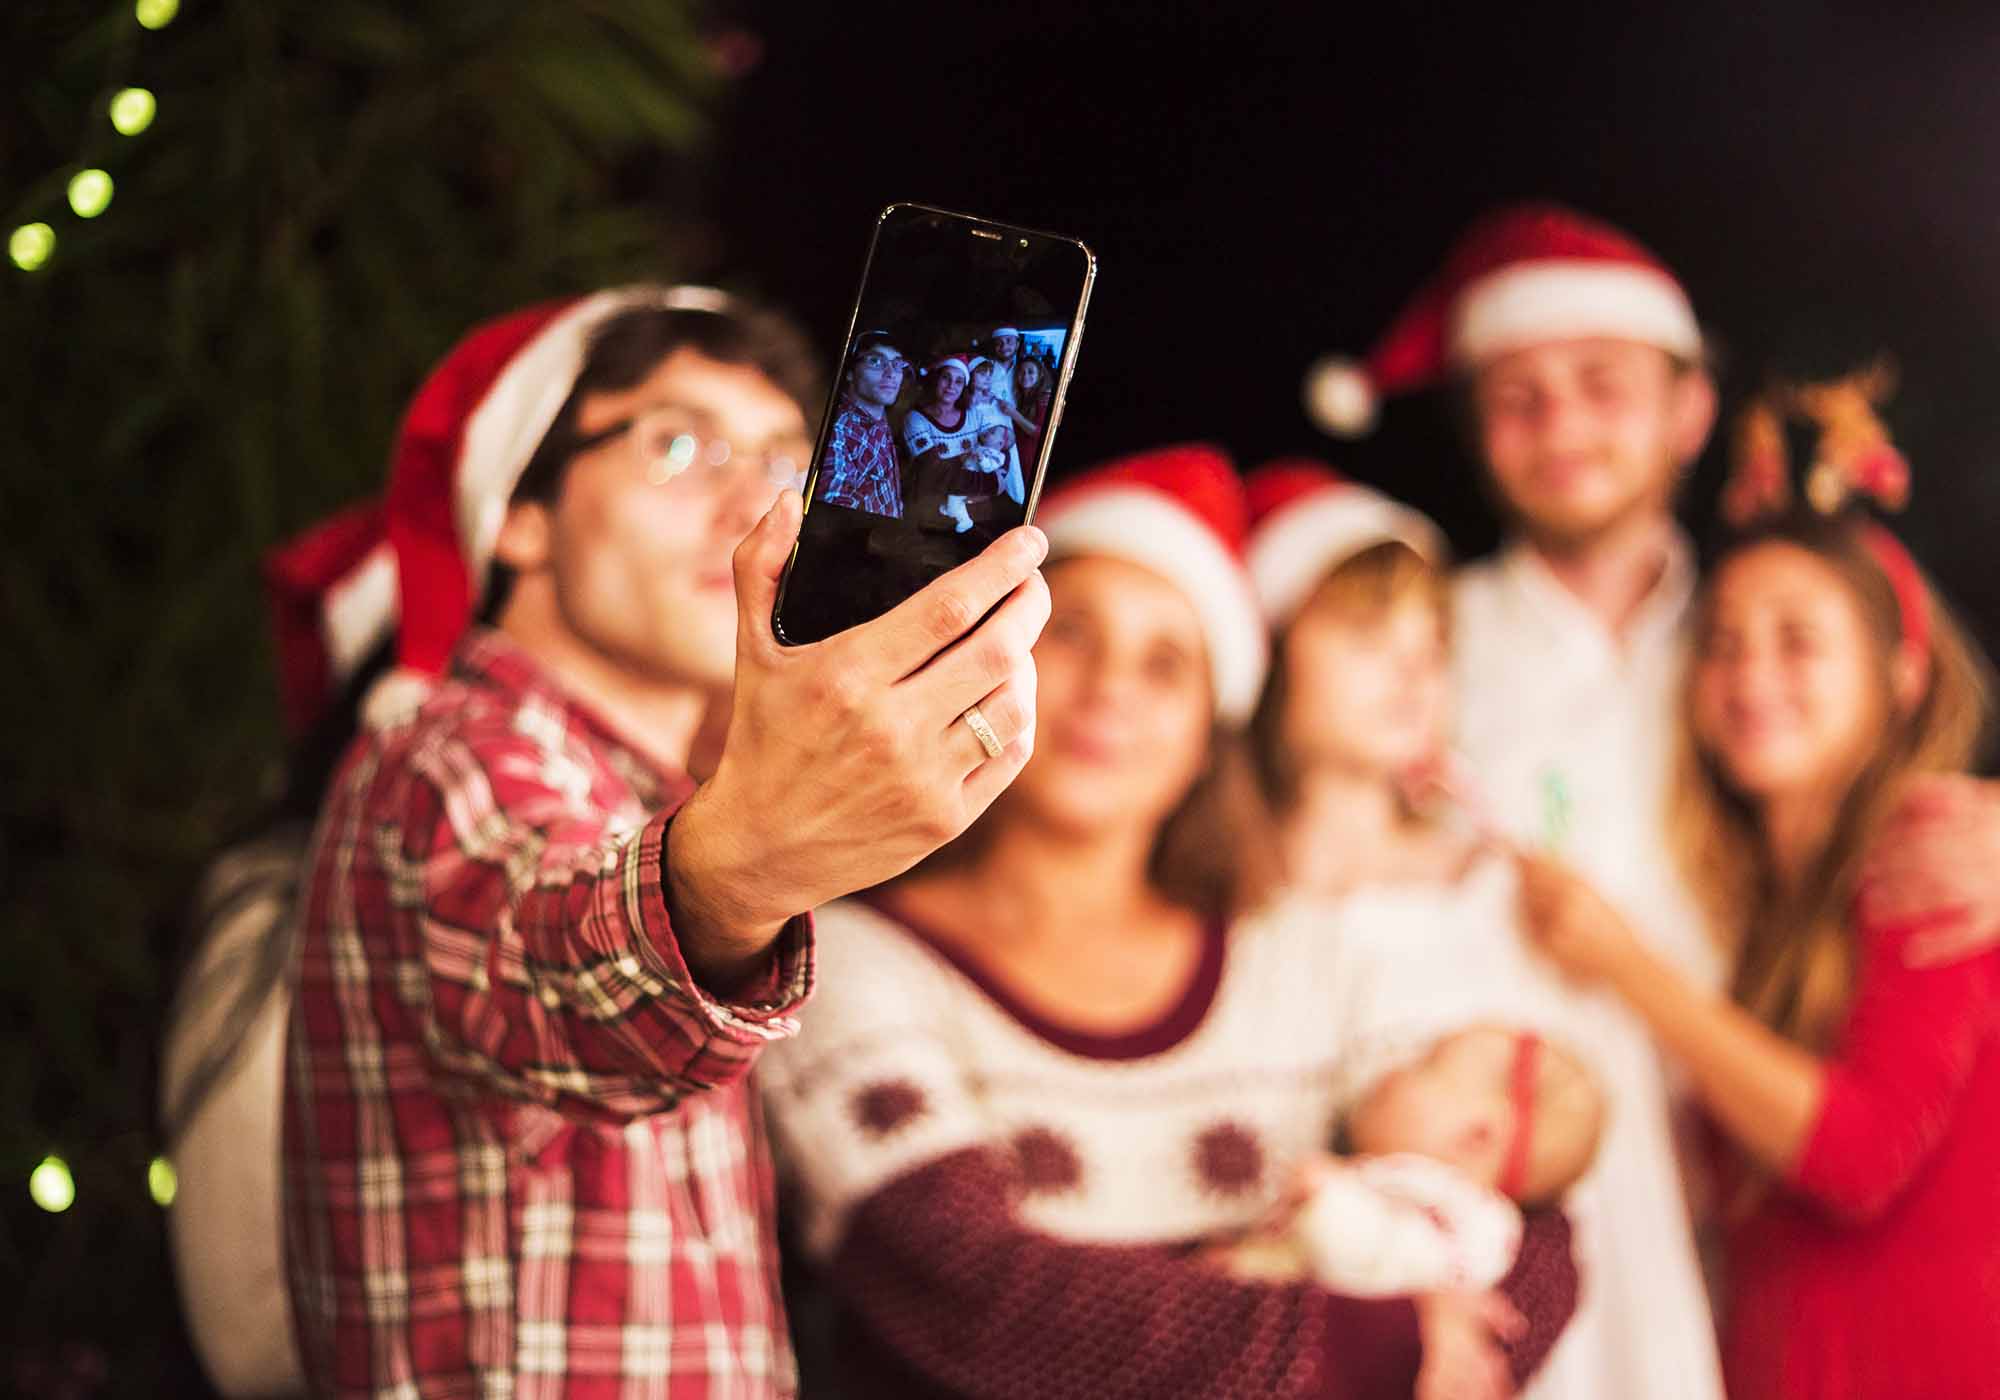 Families Rejoice in Unity, Celebrating Christmas with Joyful Gatherings